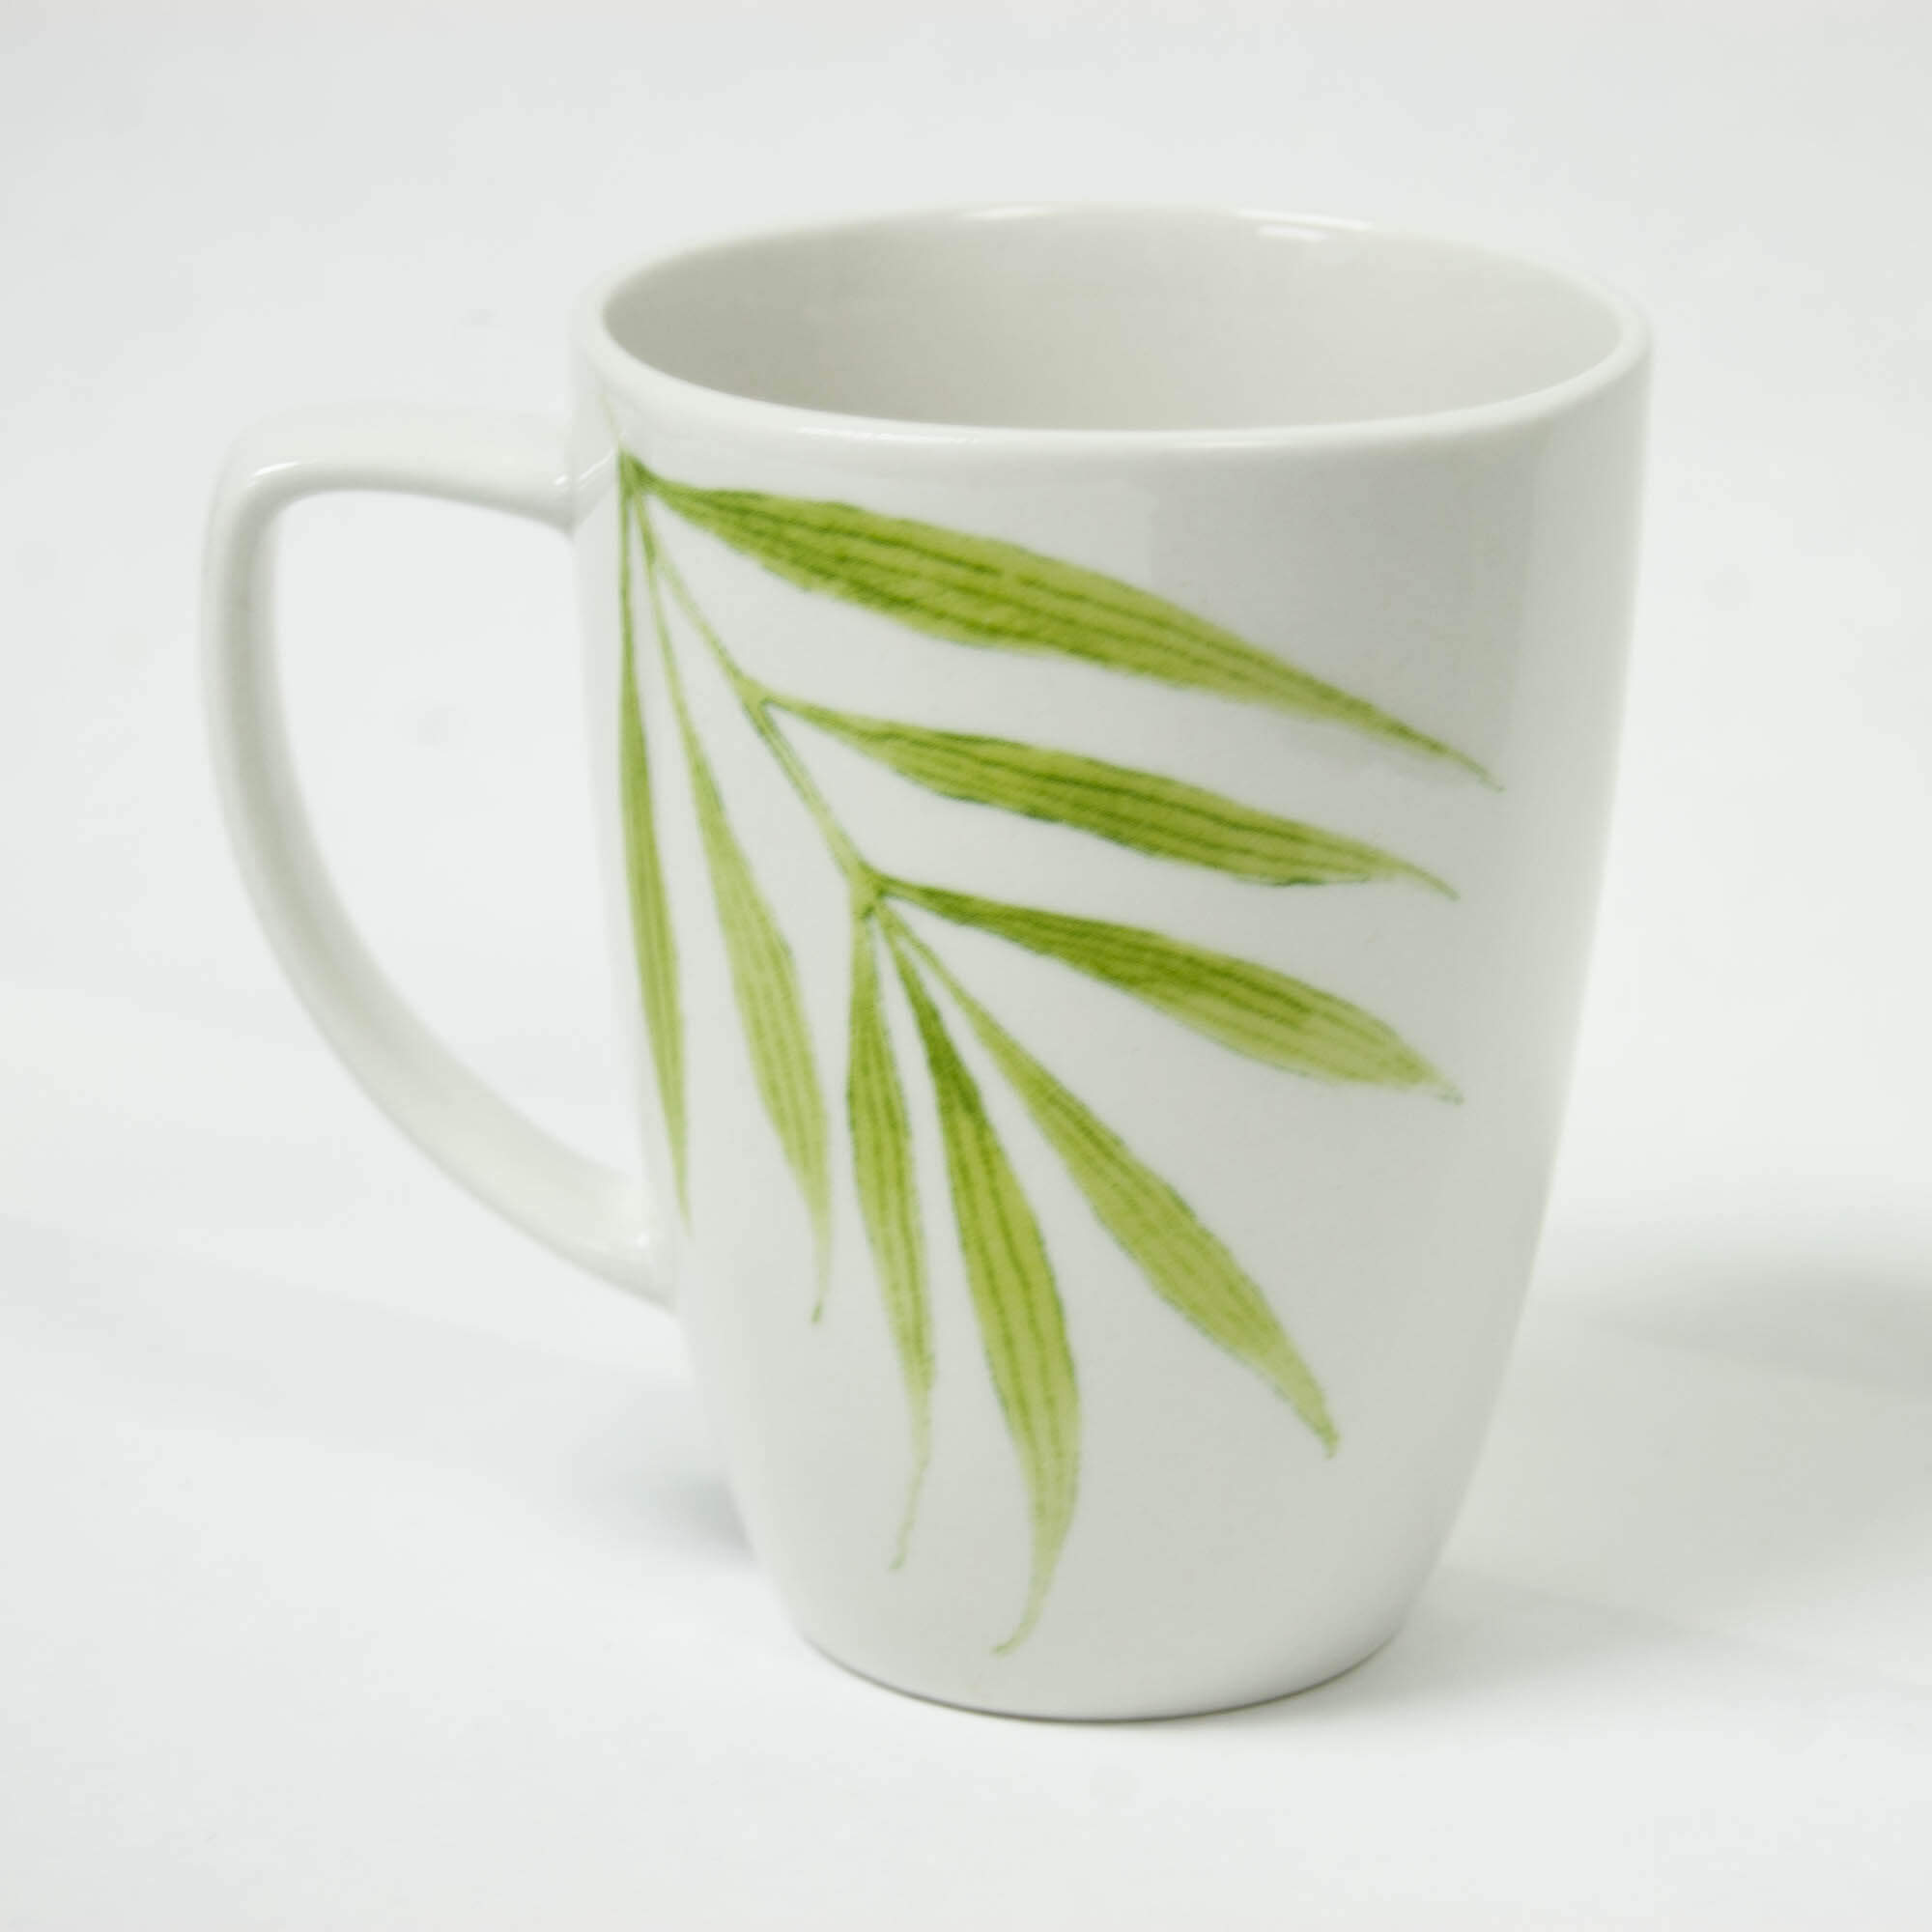 Plant Mug